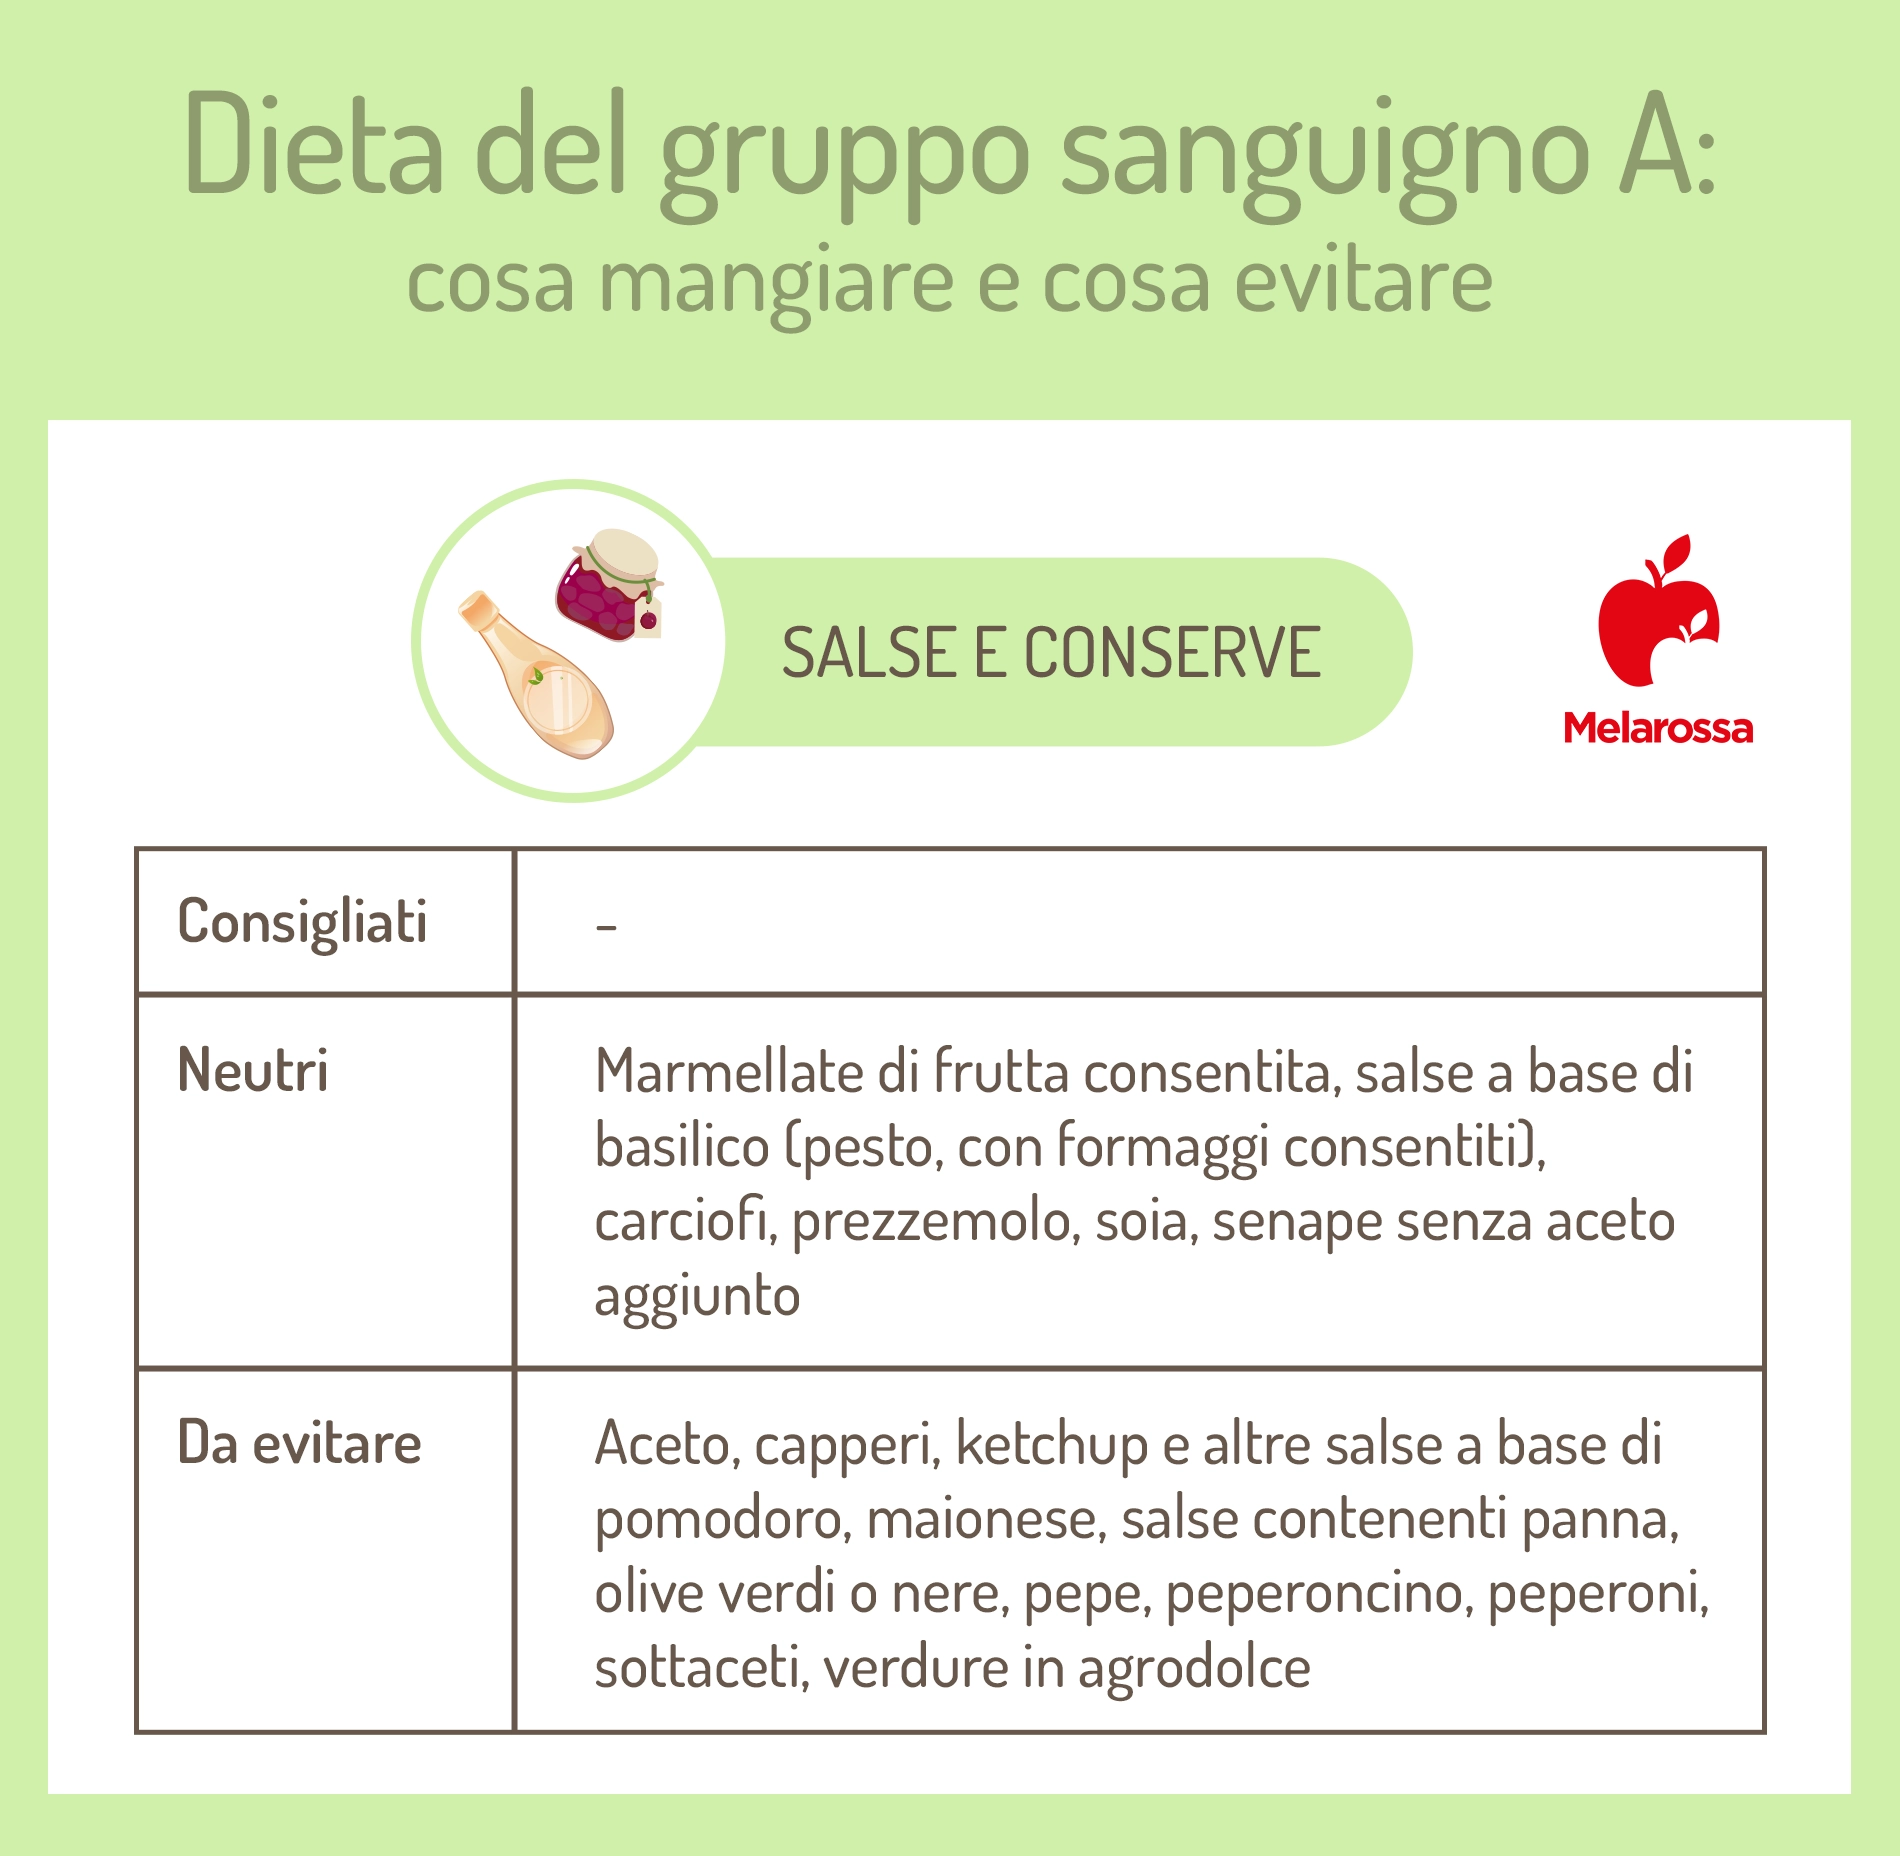 dieta gruppo sanguigno A: salse e conserve